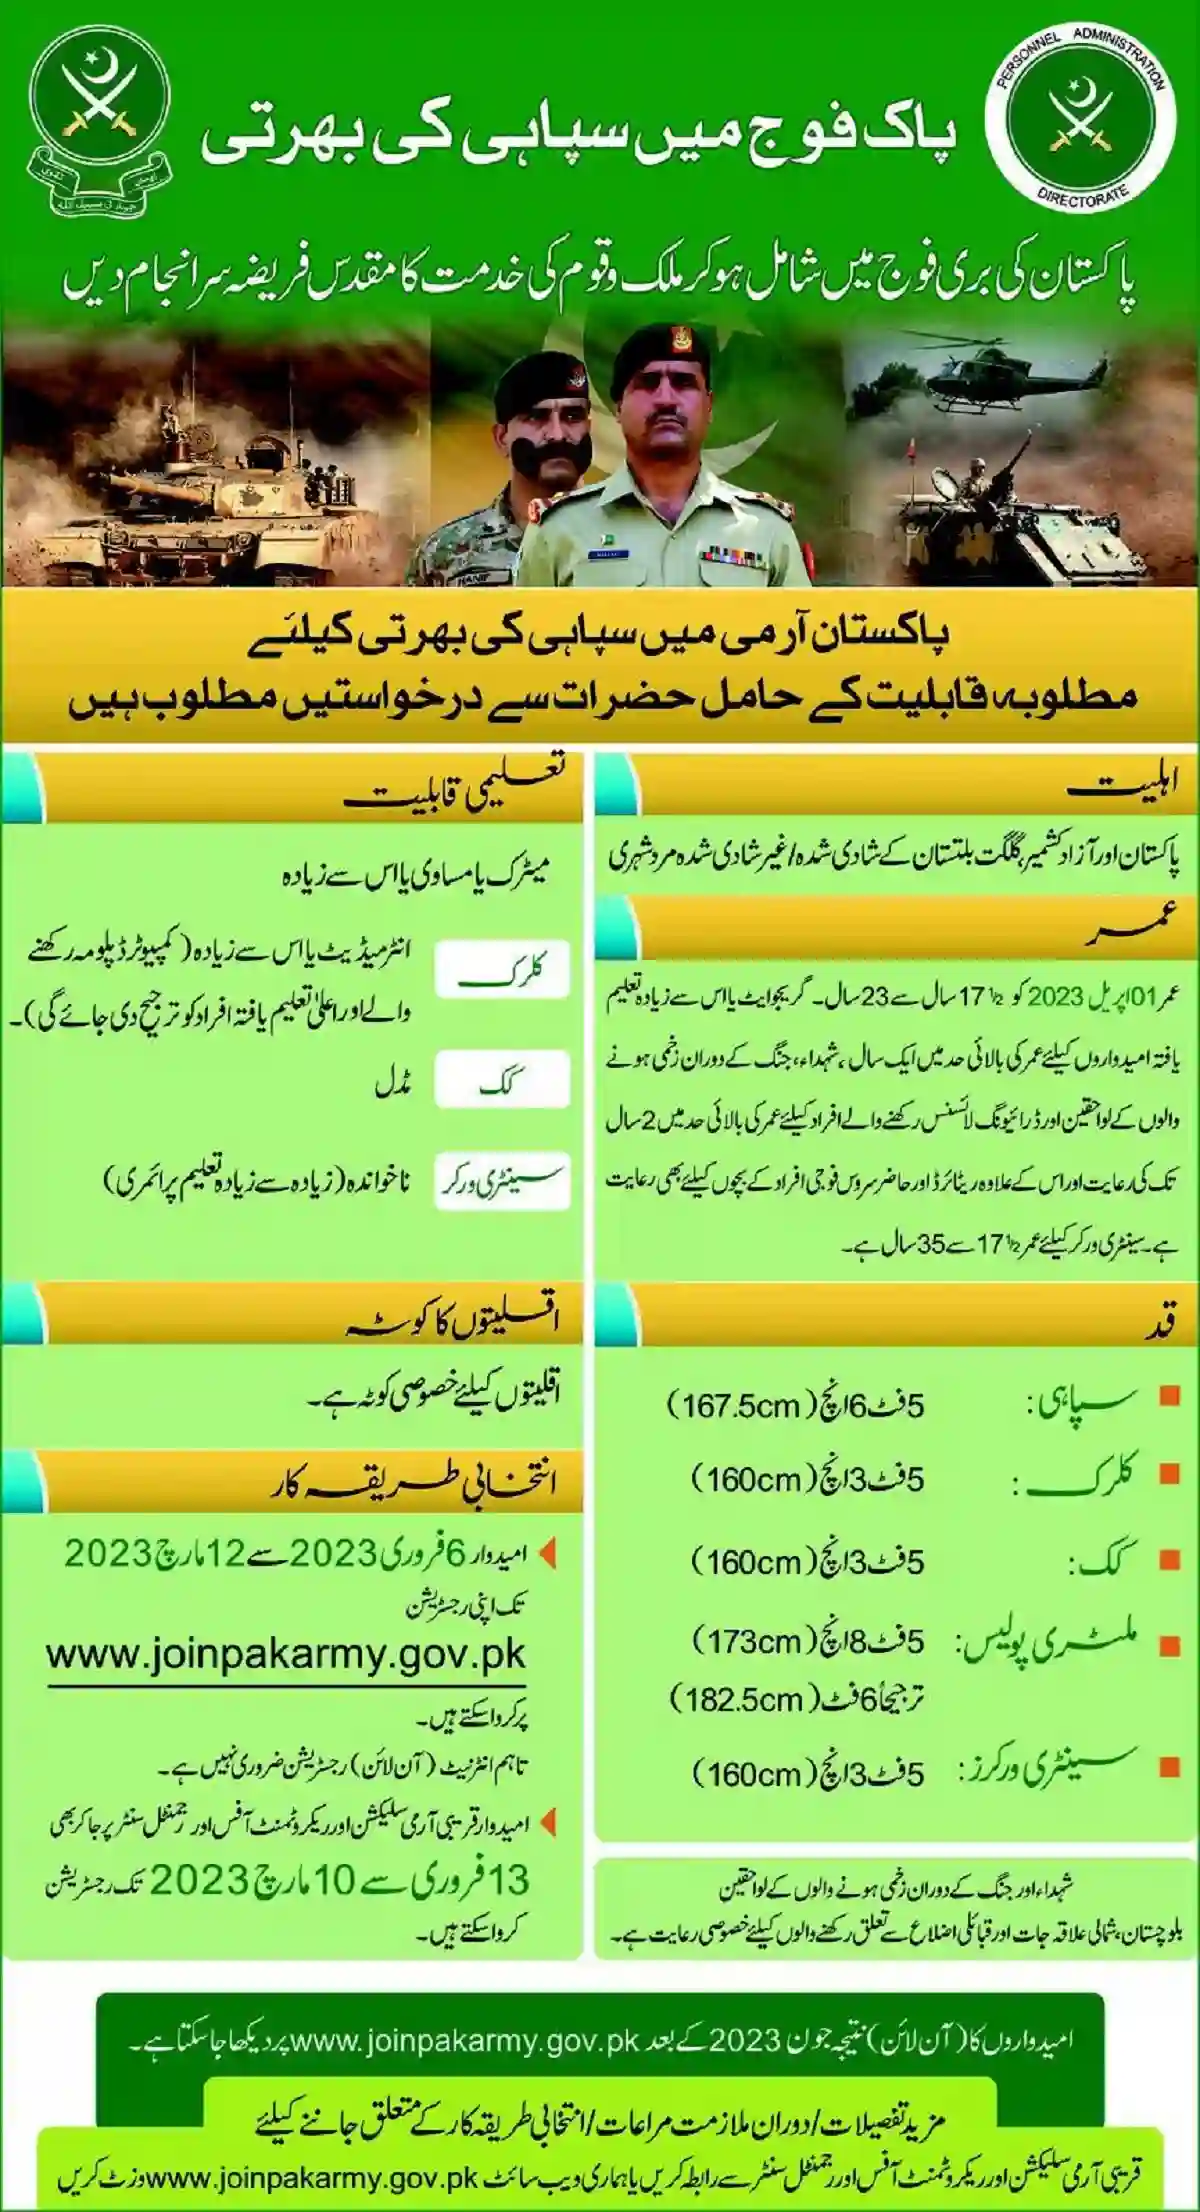 Today New Pak Army Jobs in Pakistan Latest – Join Pakistan Army Jobs 2023 Online Registration via joinpakarmy.gov.pk